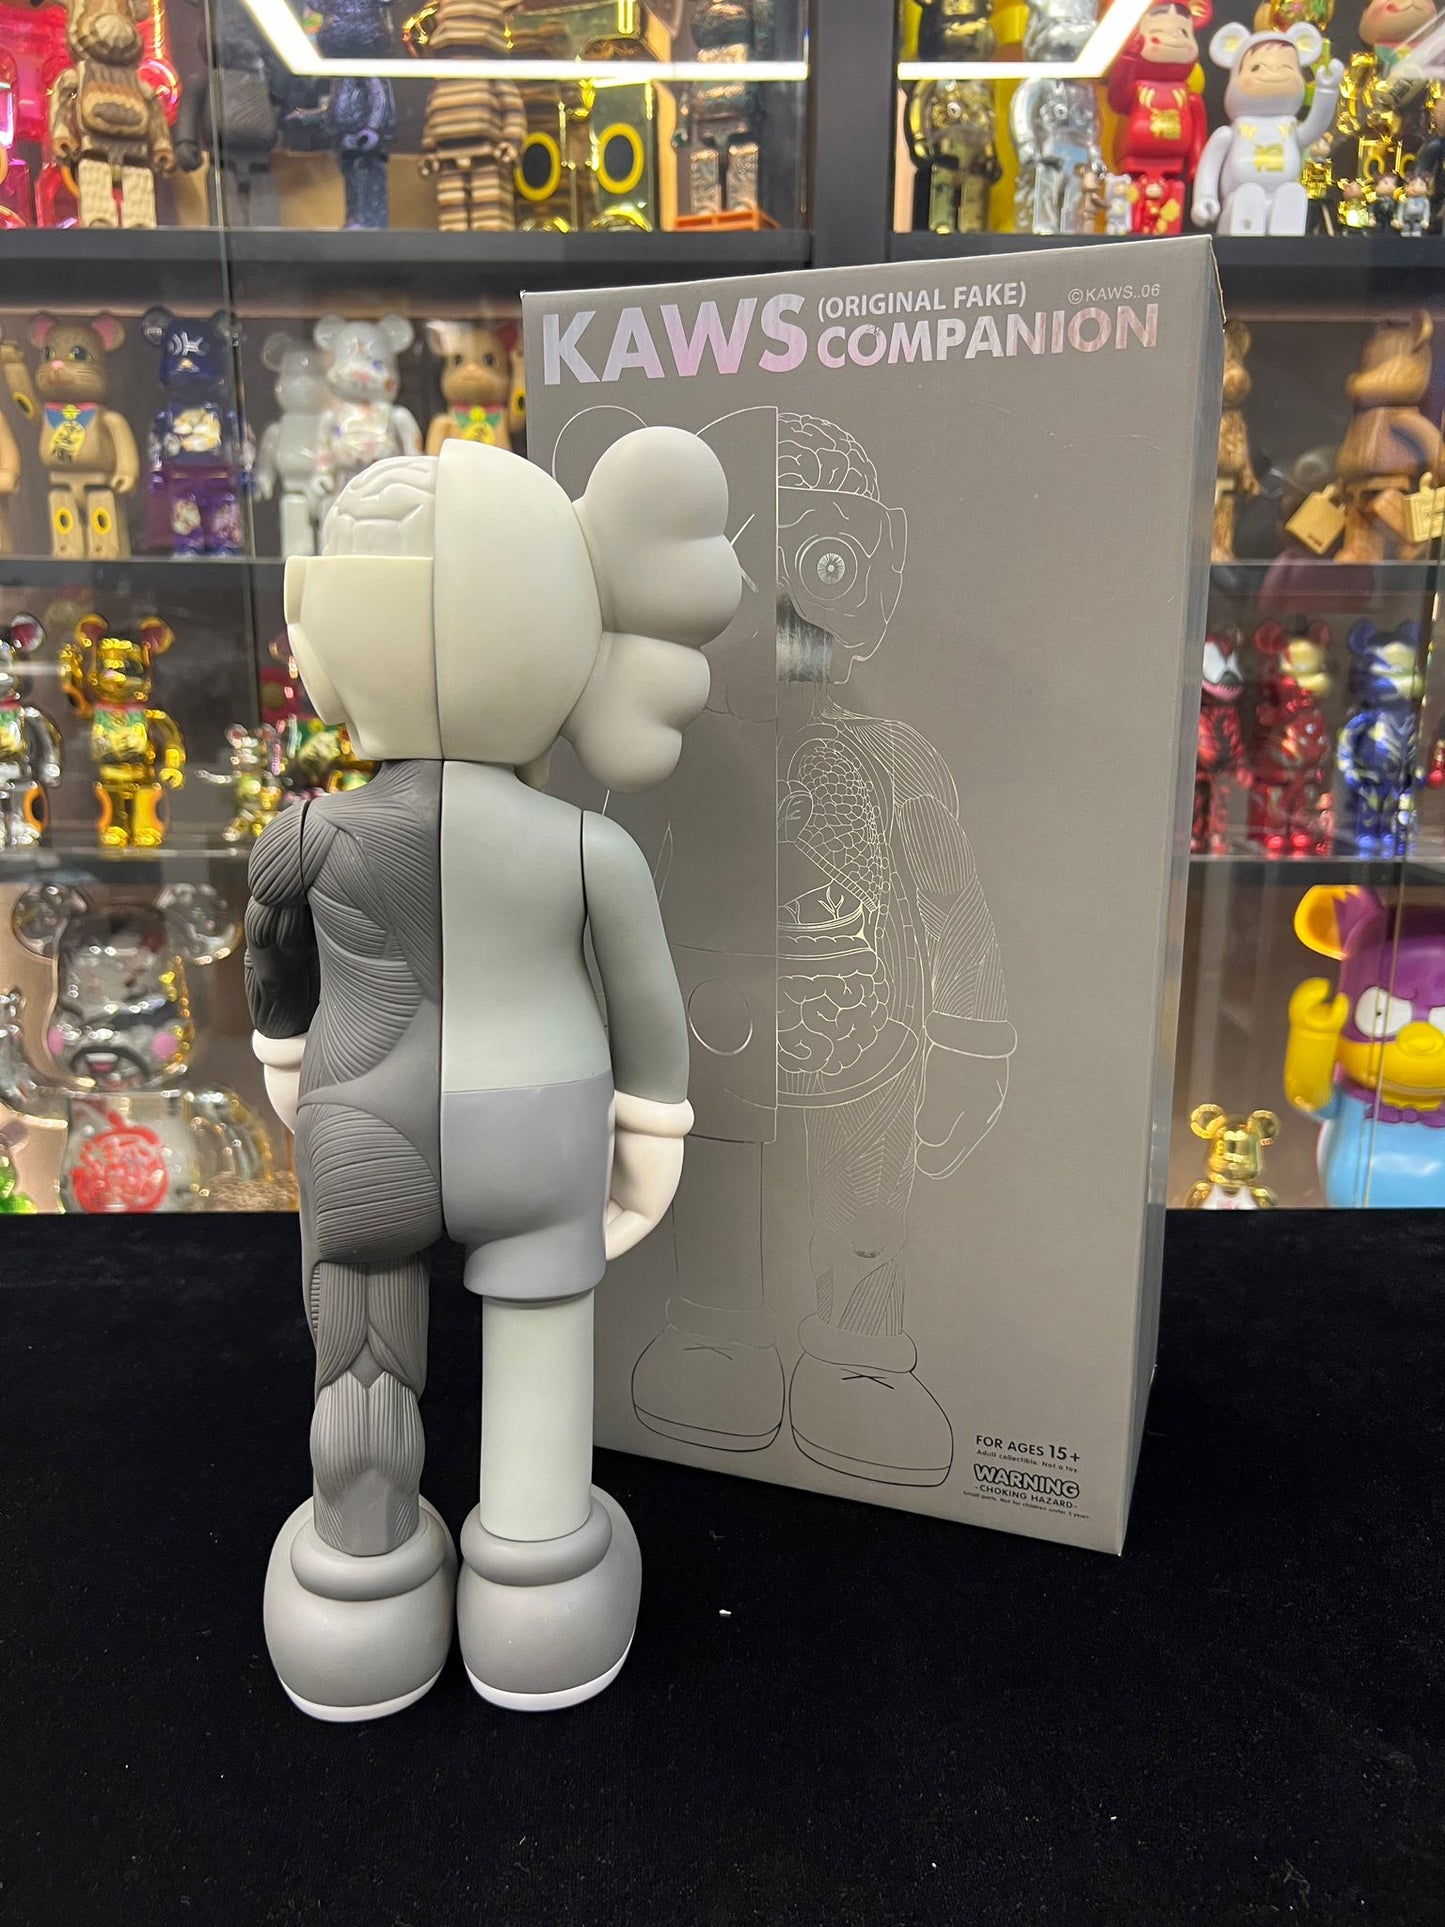 Kaws Companion (Original Fake) 2006 灰半解